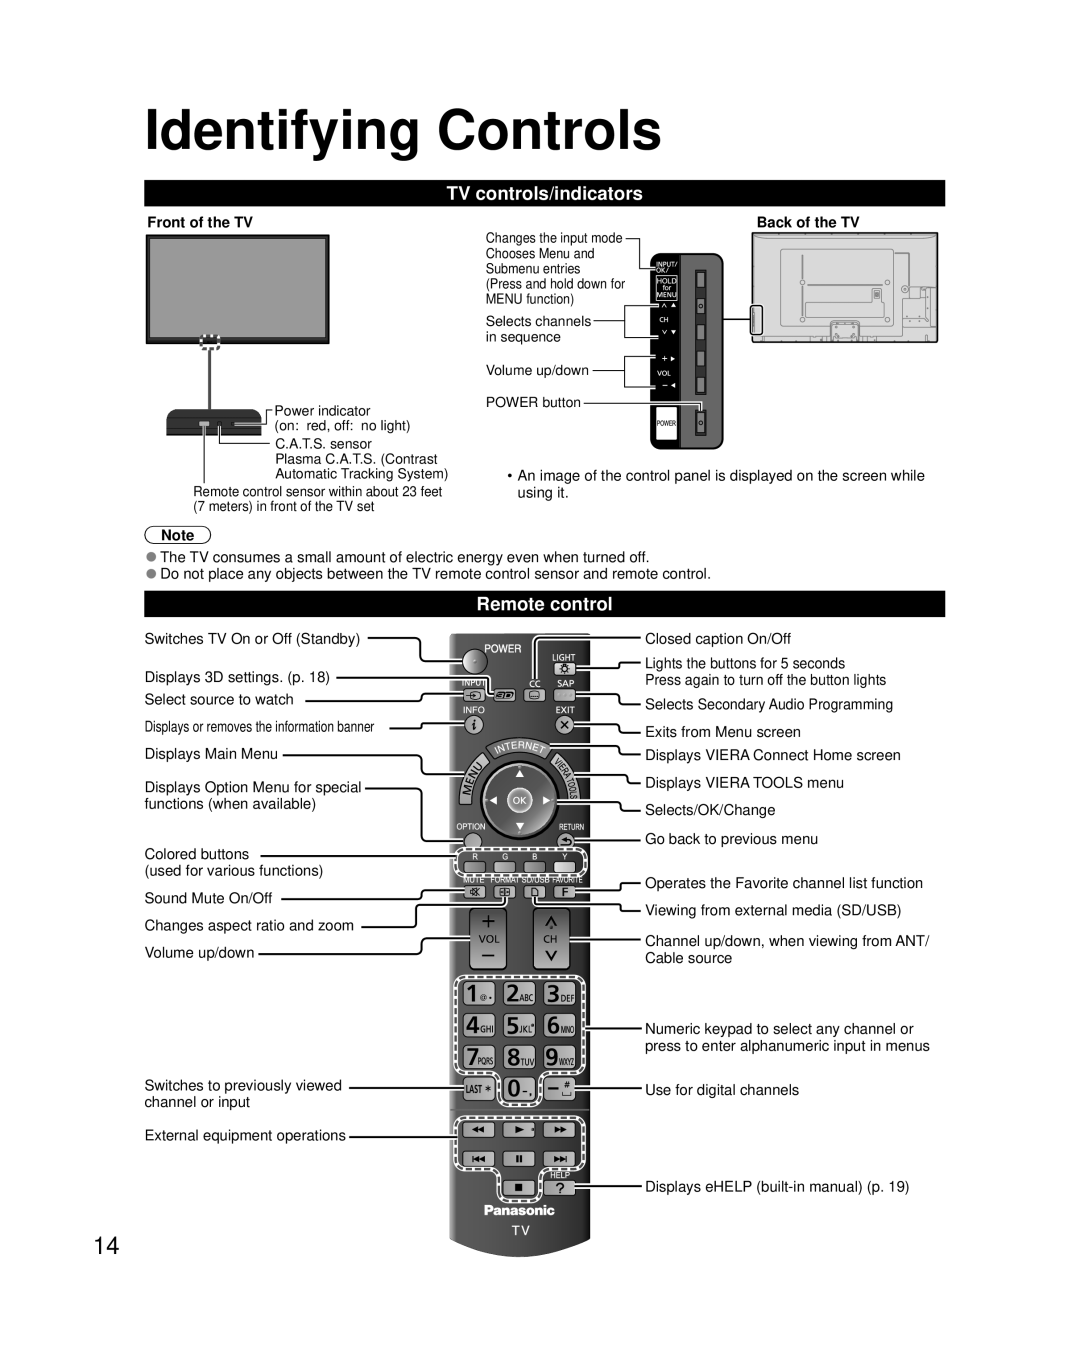 Panasonic TC-P55VT50 Identifying Controls, TV controls/indicators, Remote control, Front of the TV, Back of the TV 